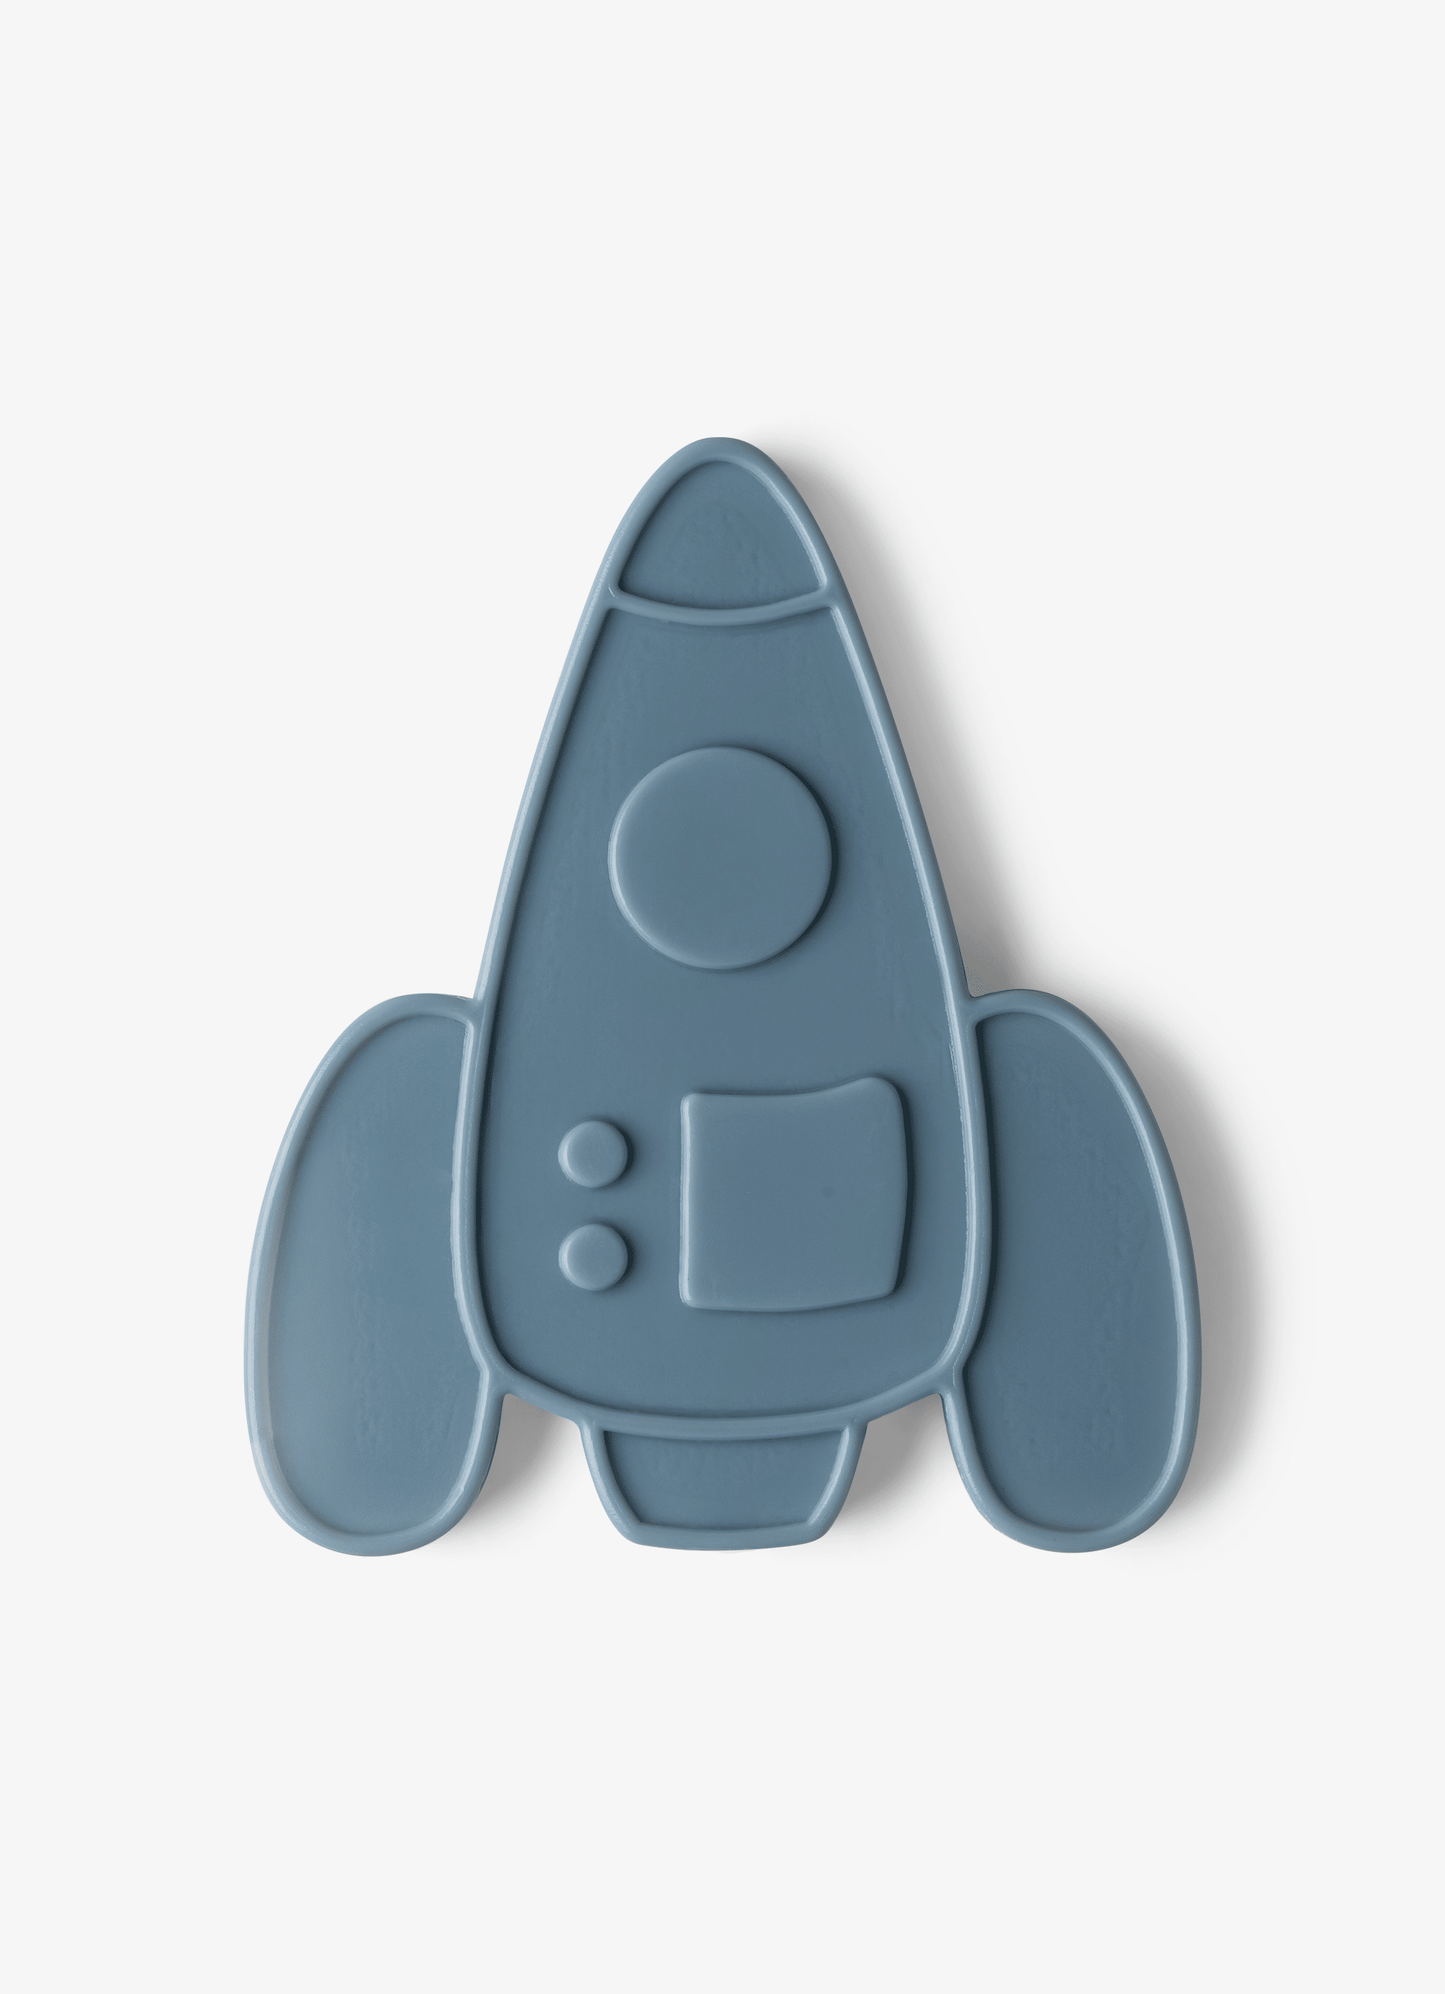 Ice packs - set of 3 - Spaceship Dusty Blue